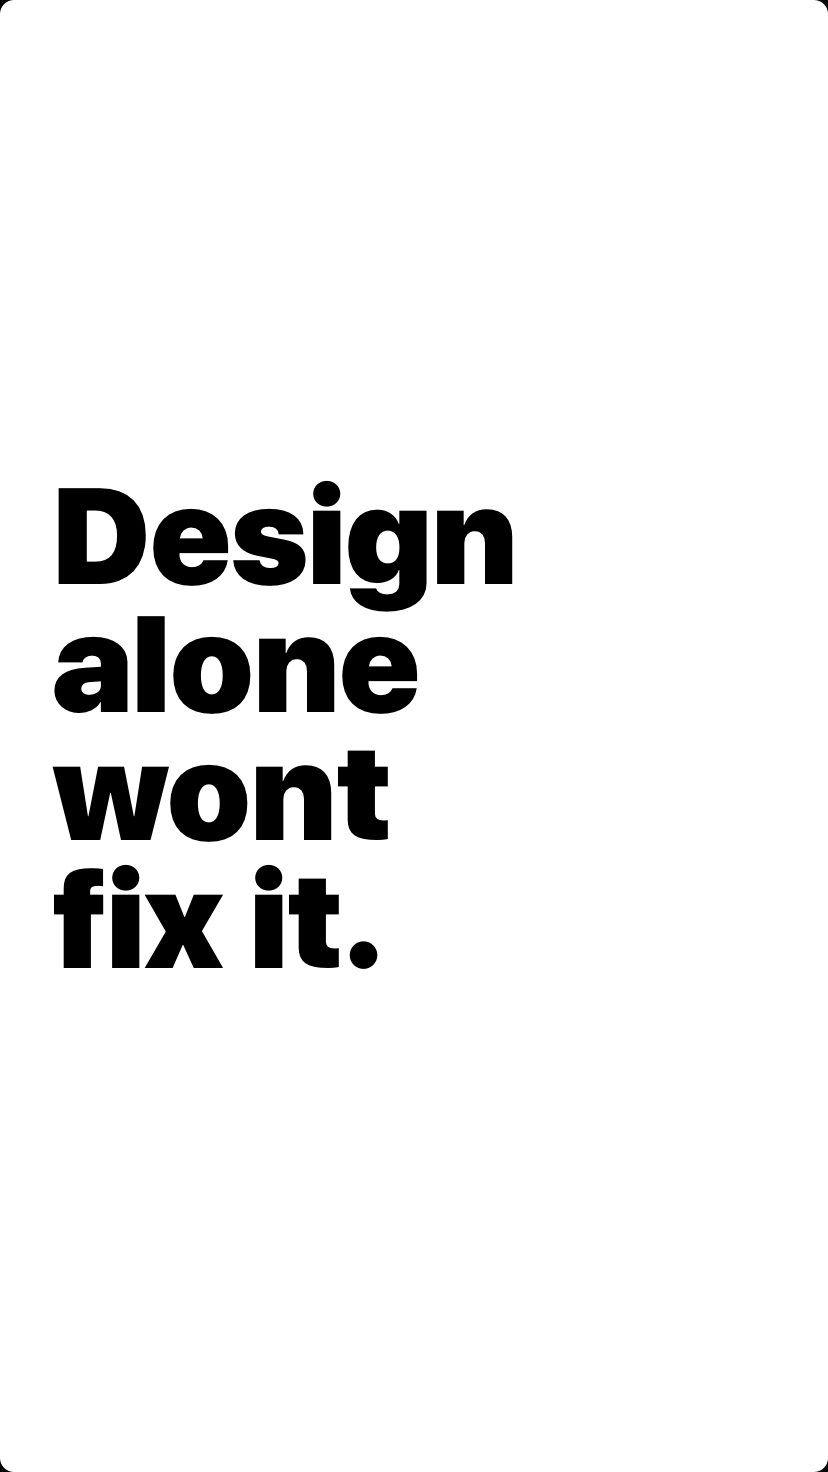 Design alone wont fix it.